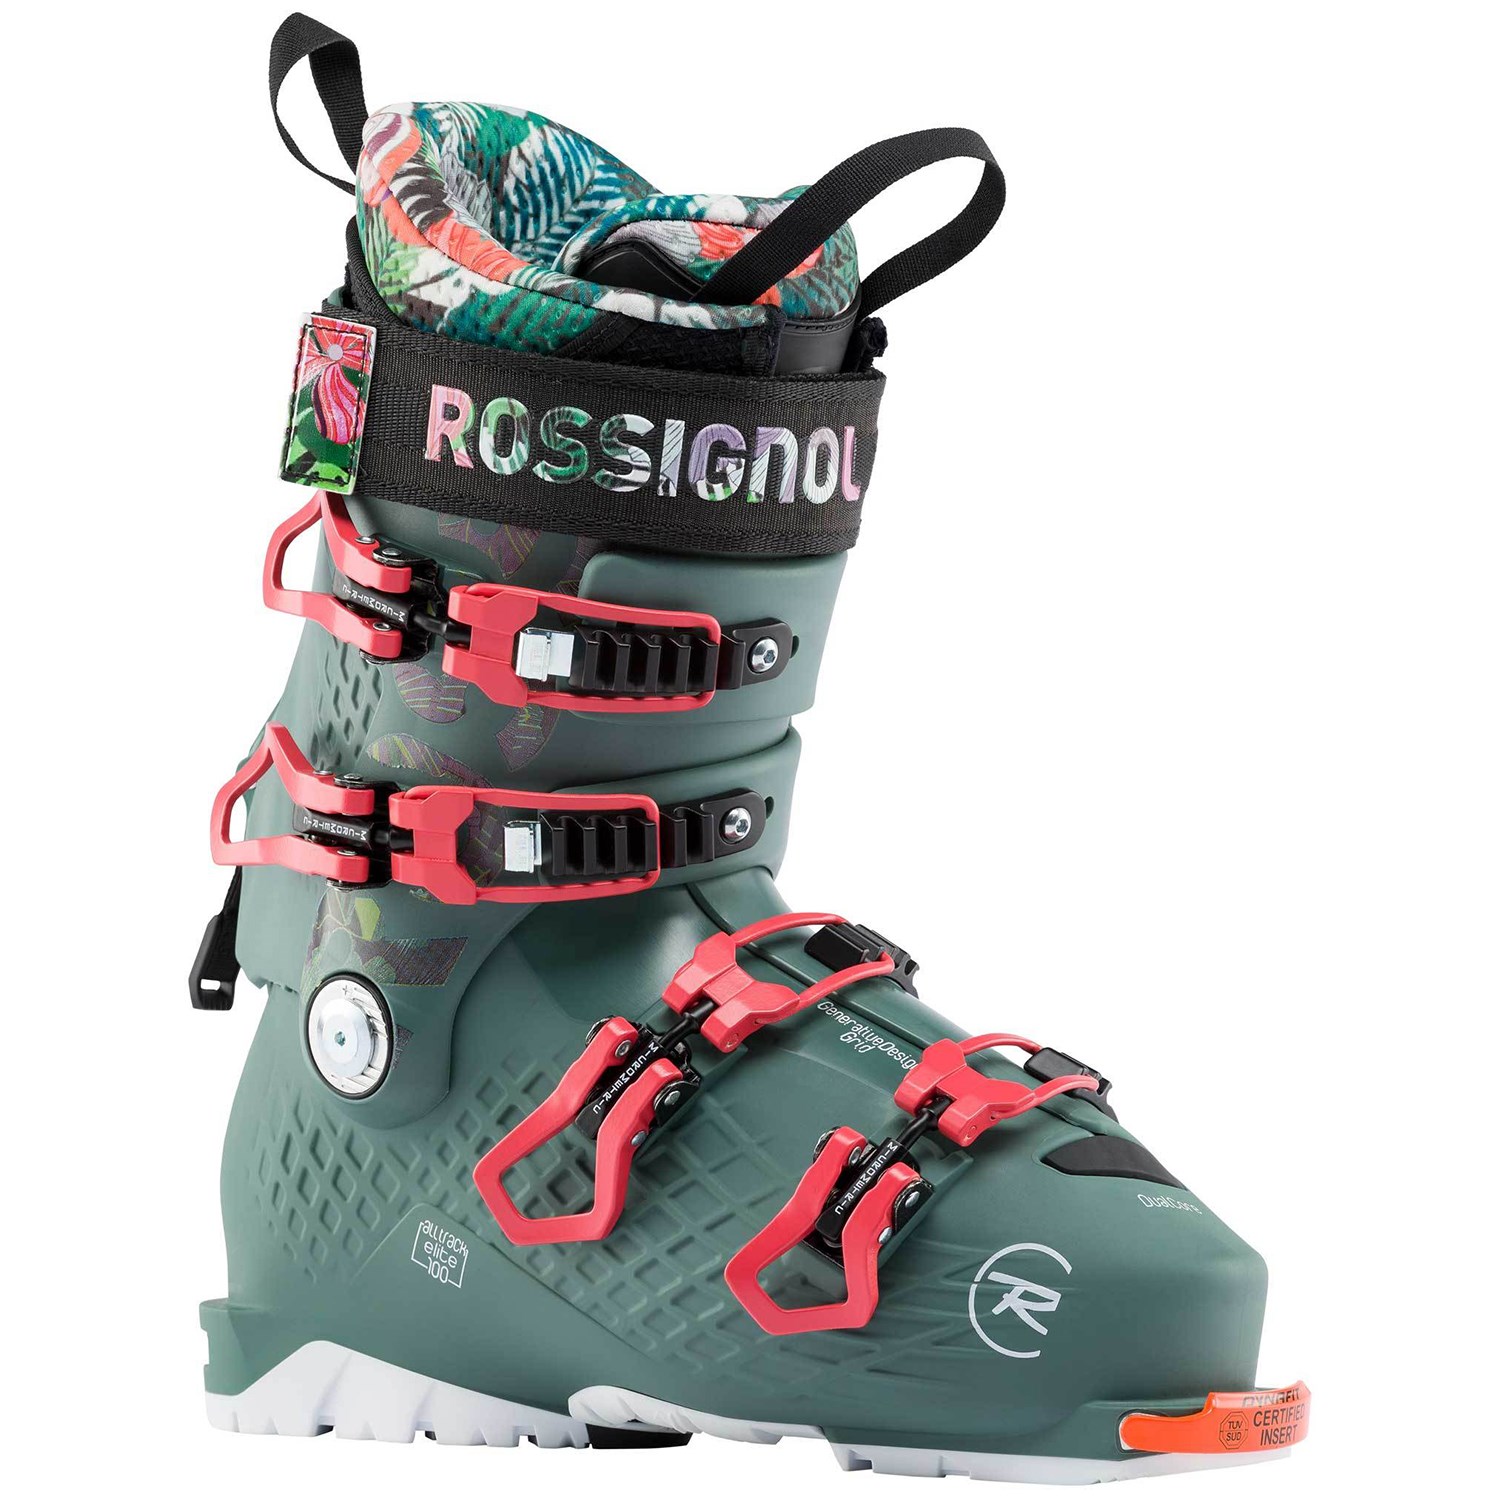 275mm ski boots